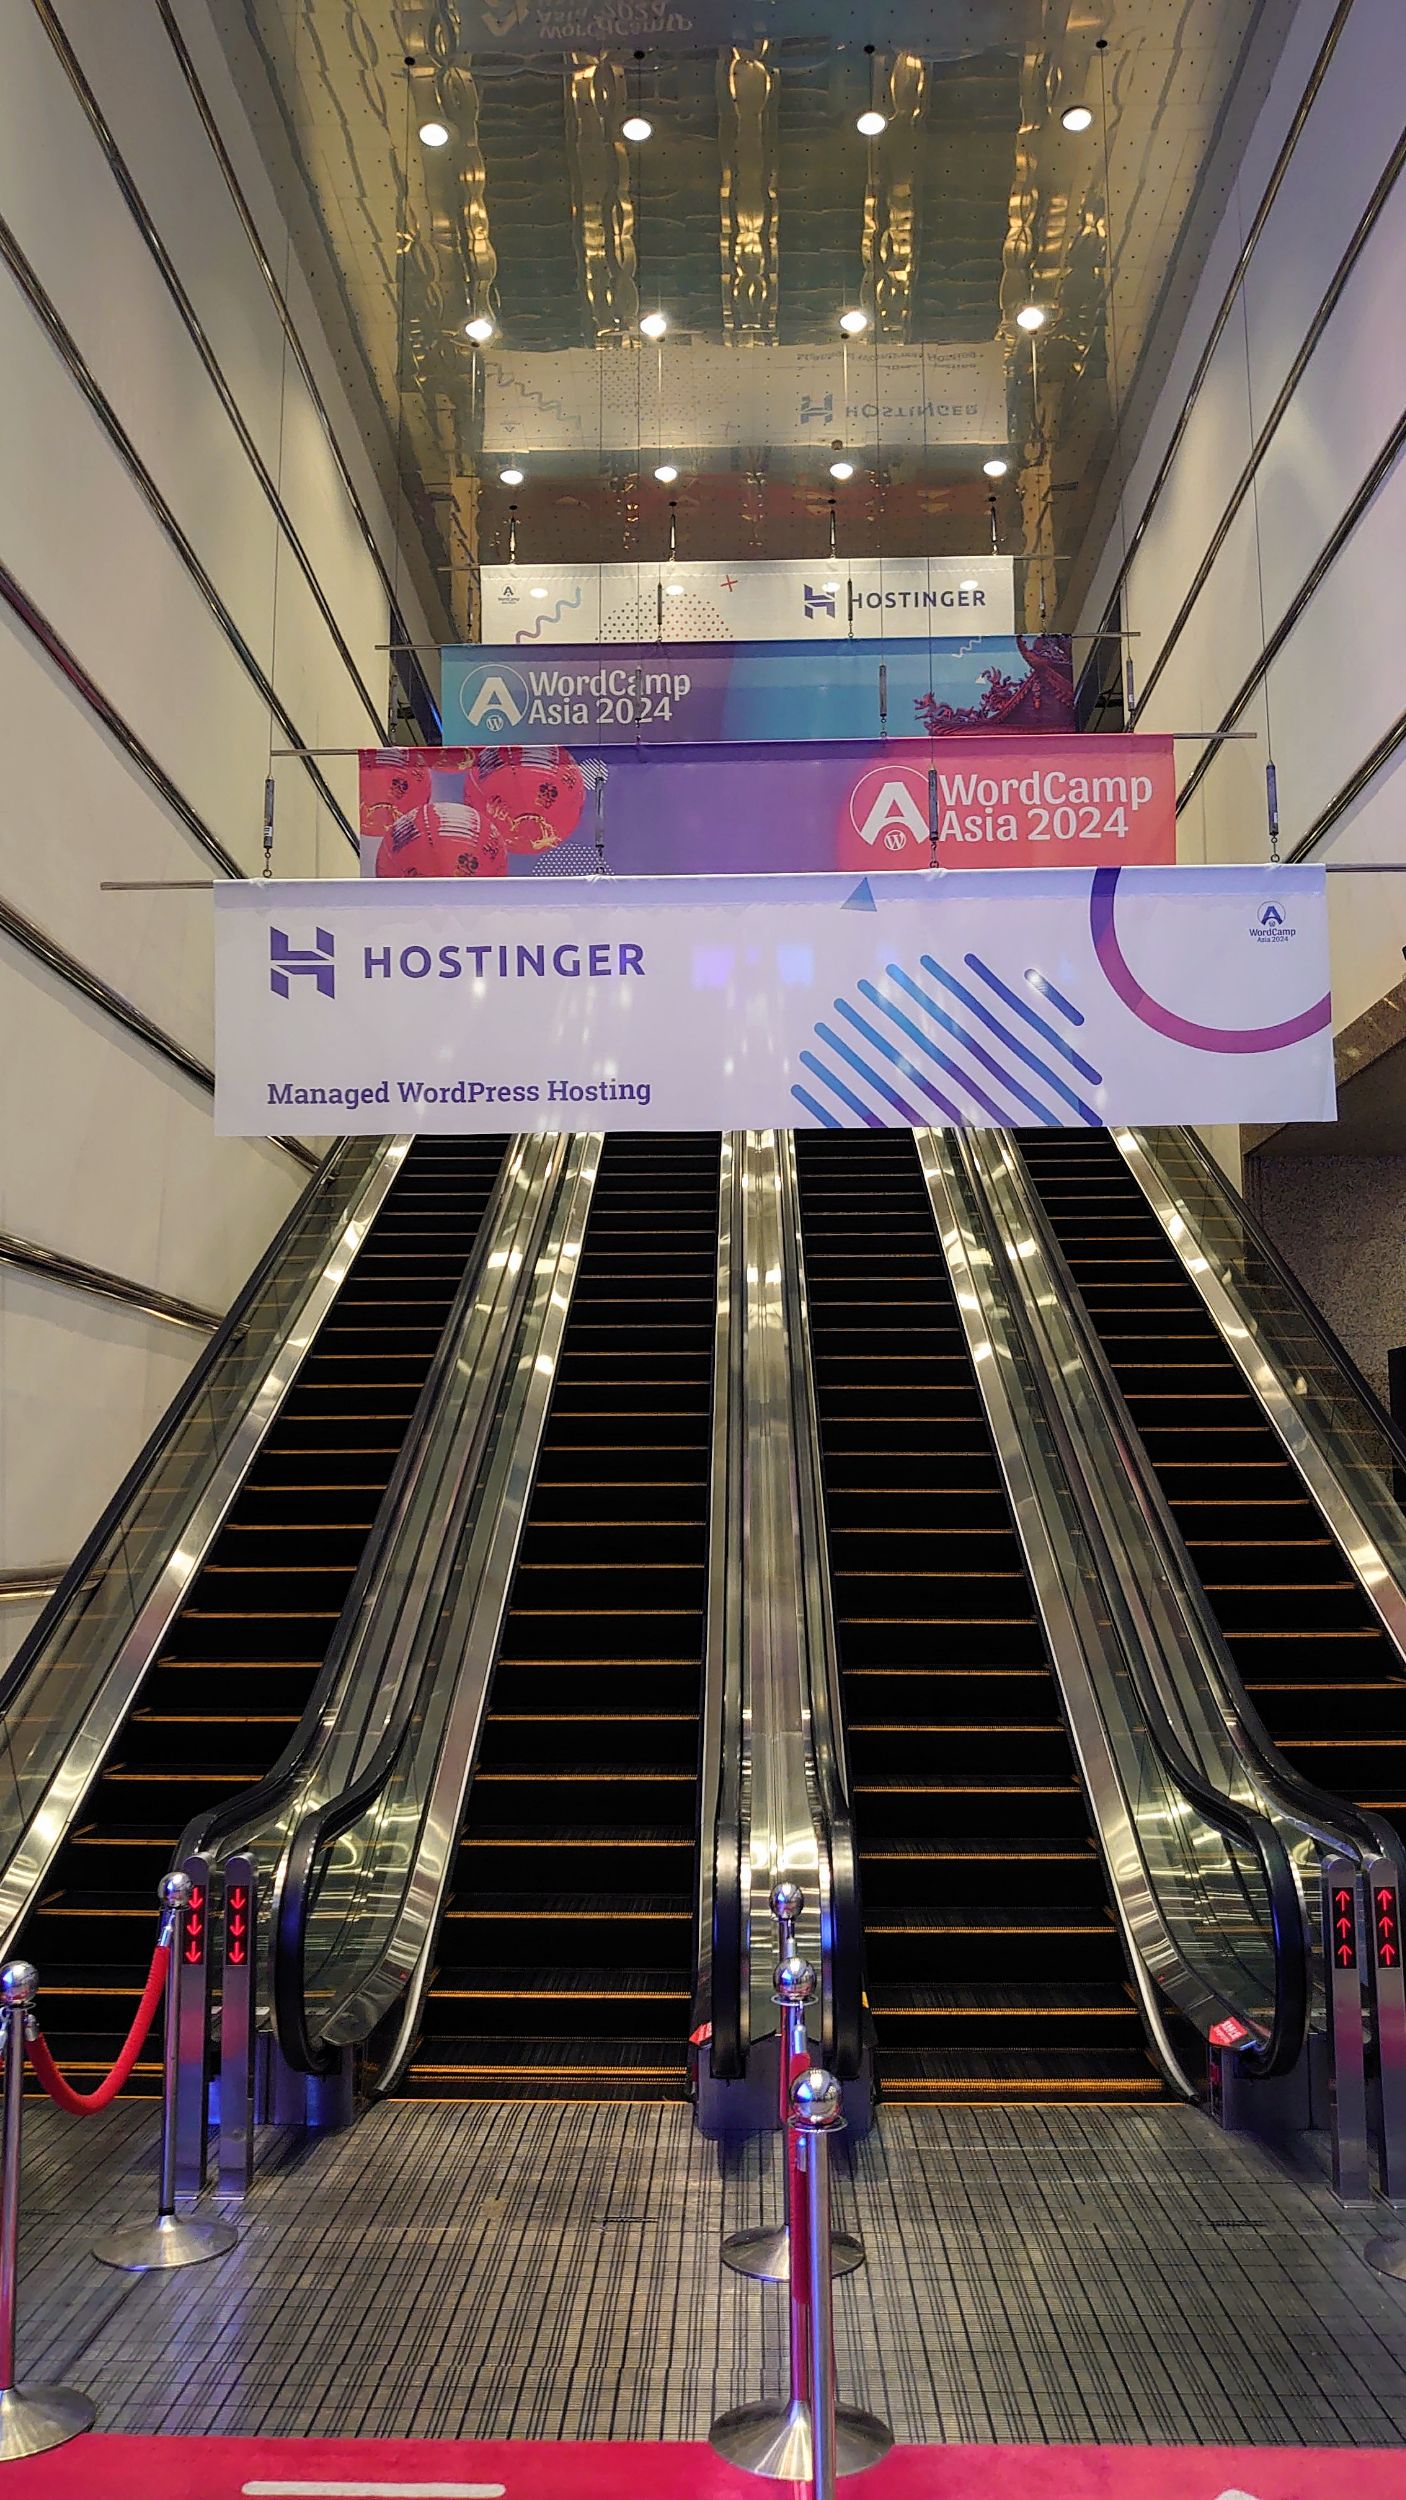 Sponsor add-ons - Hanning banners on escalators - two for Hostinger